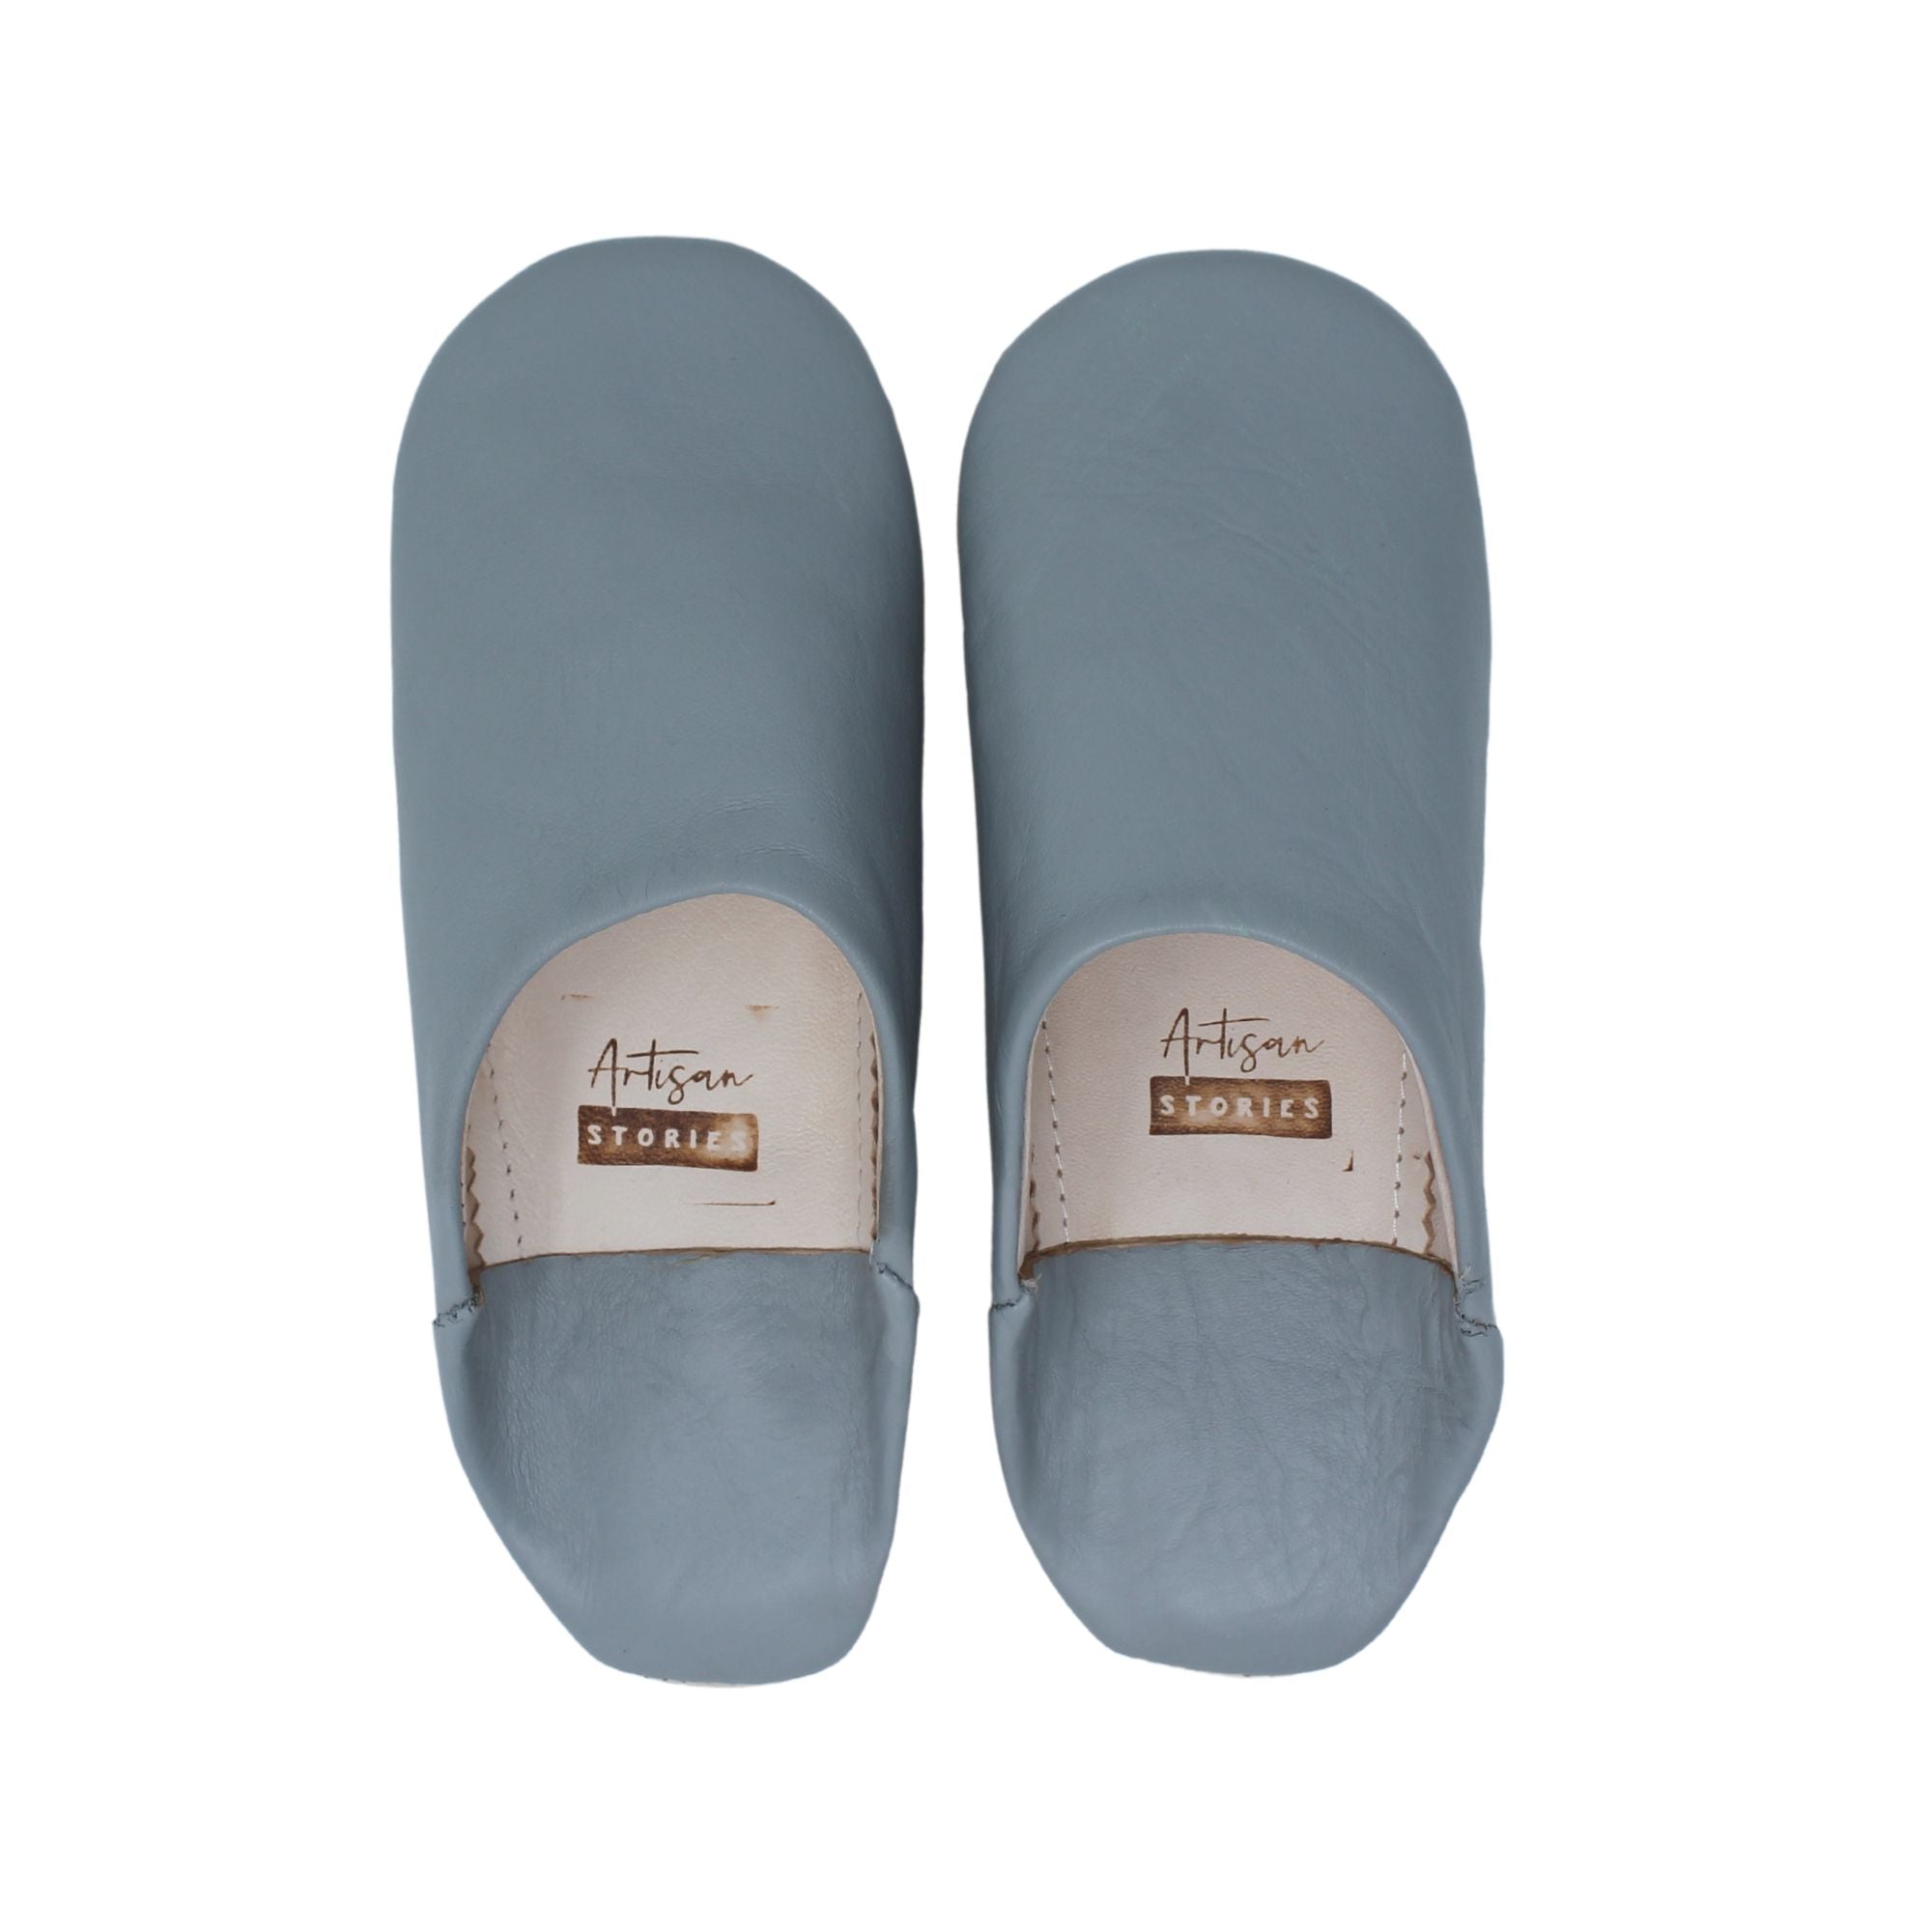 Women's leather slippers Light Grey - Artisan Stories